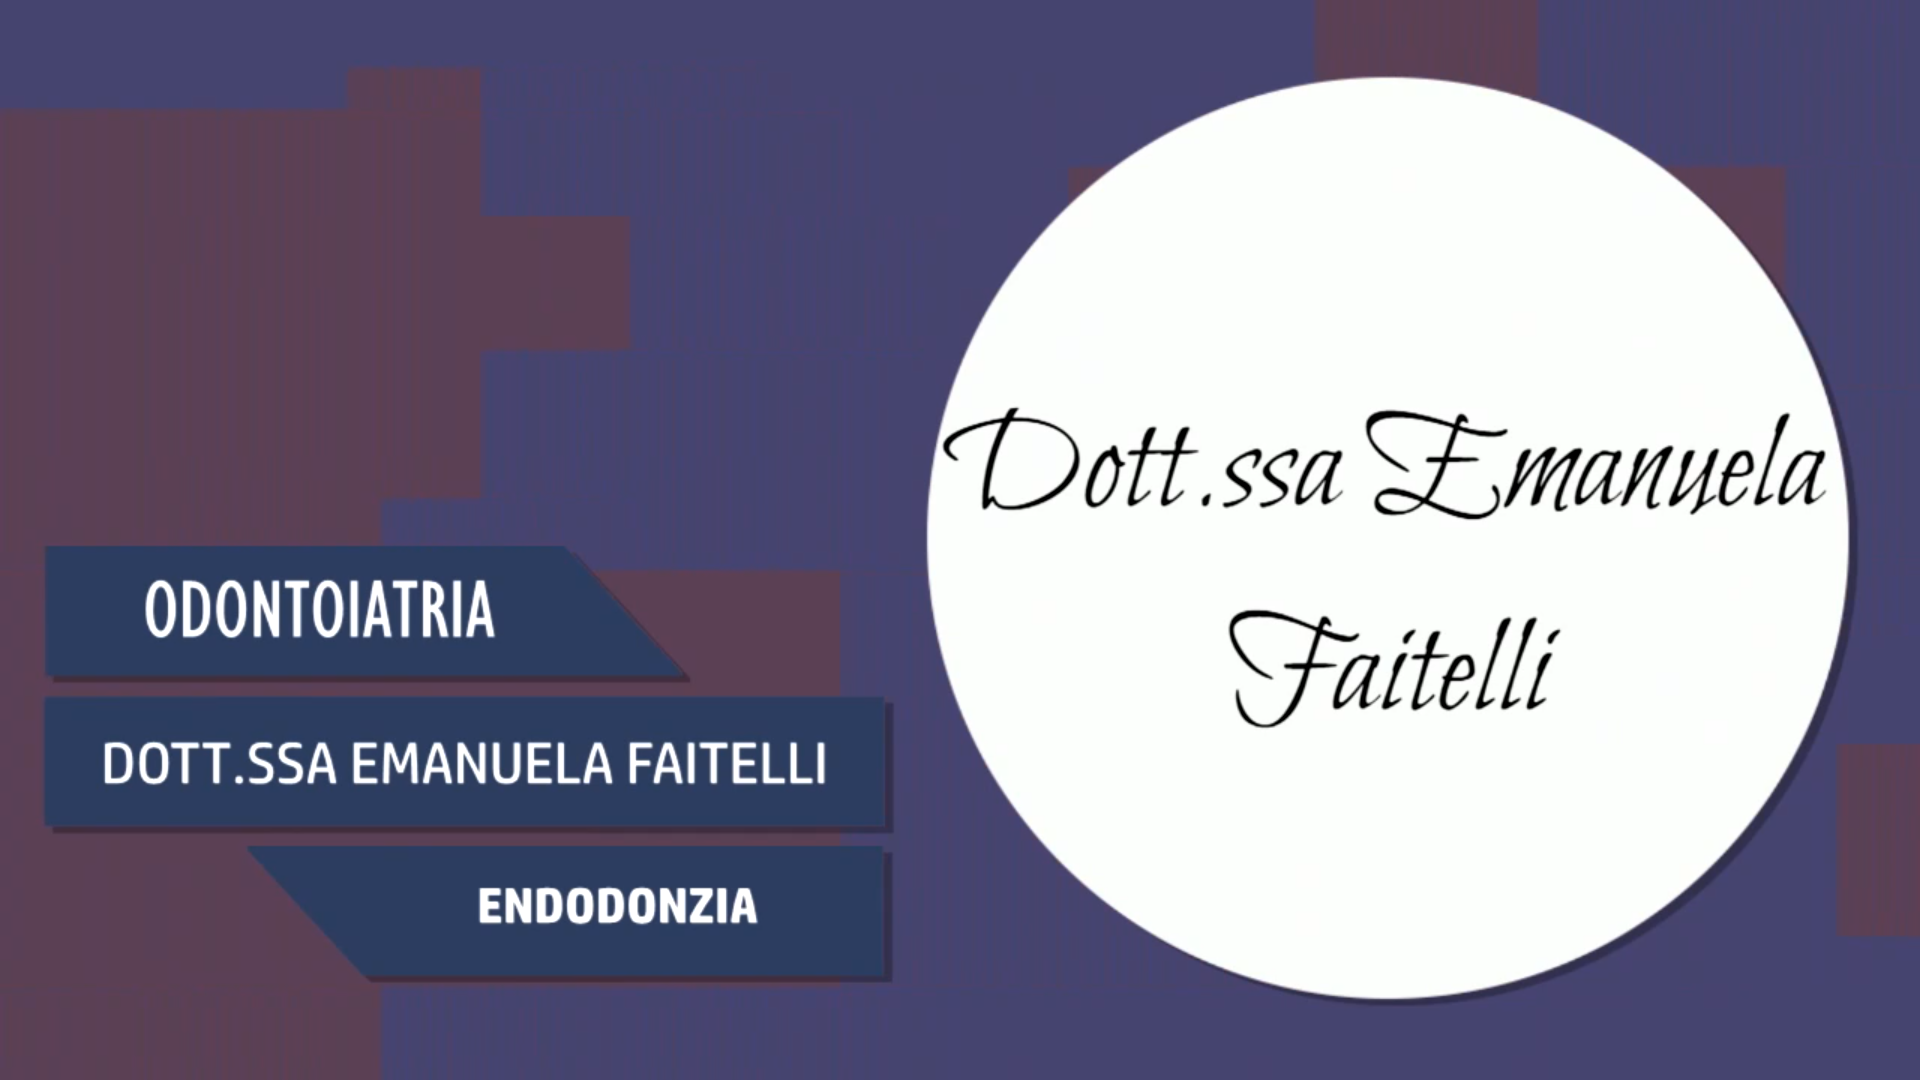 Intervista alla Dott.ssa Emanuela Faitelli – Endodonzia